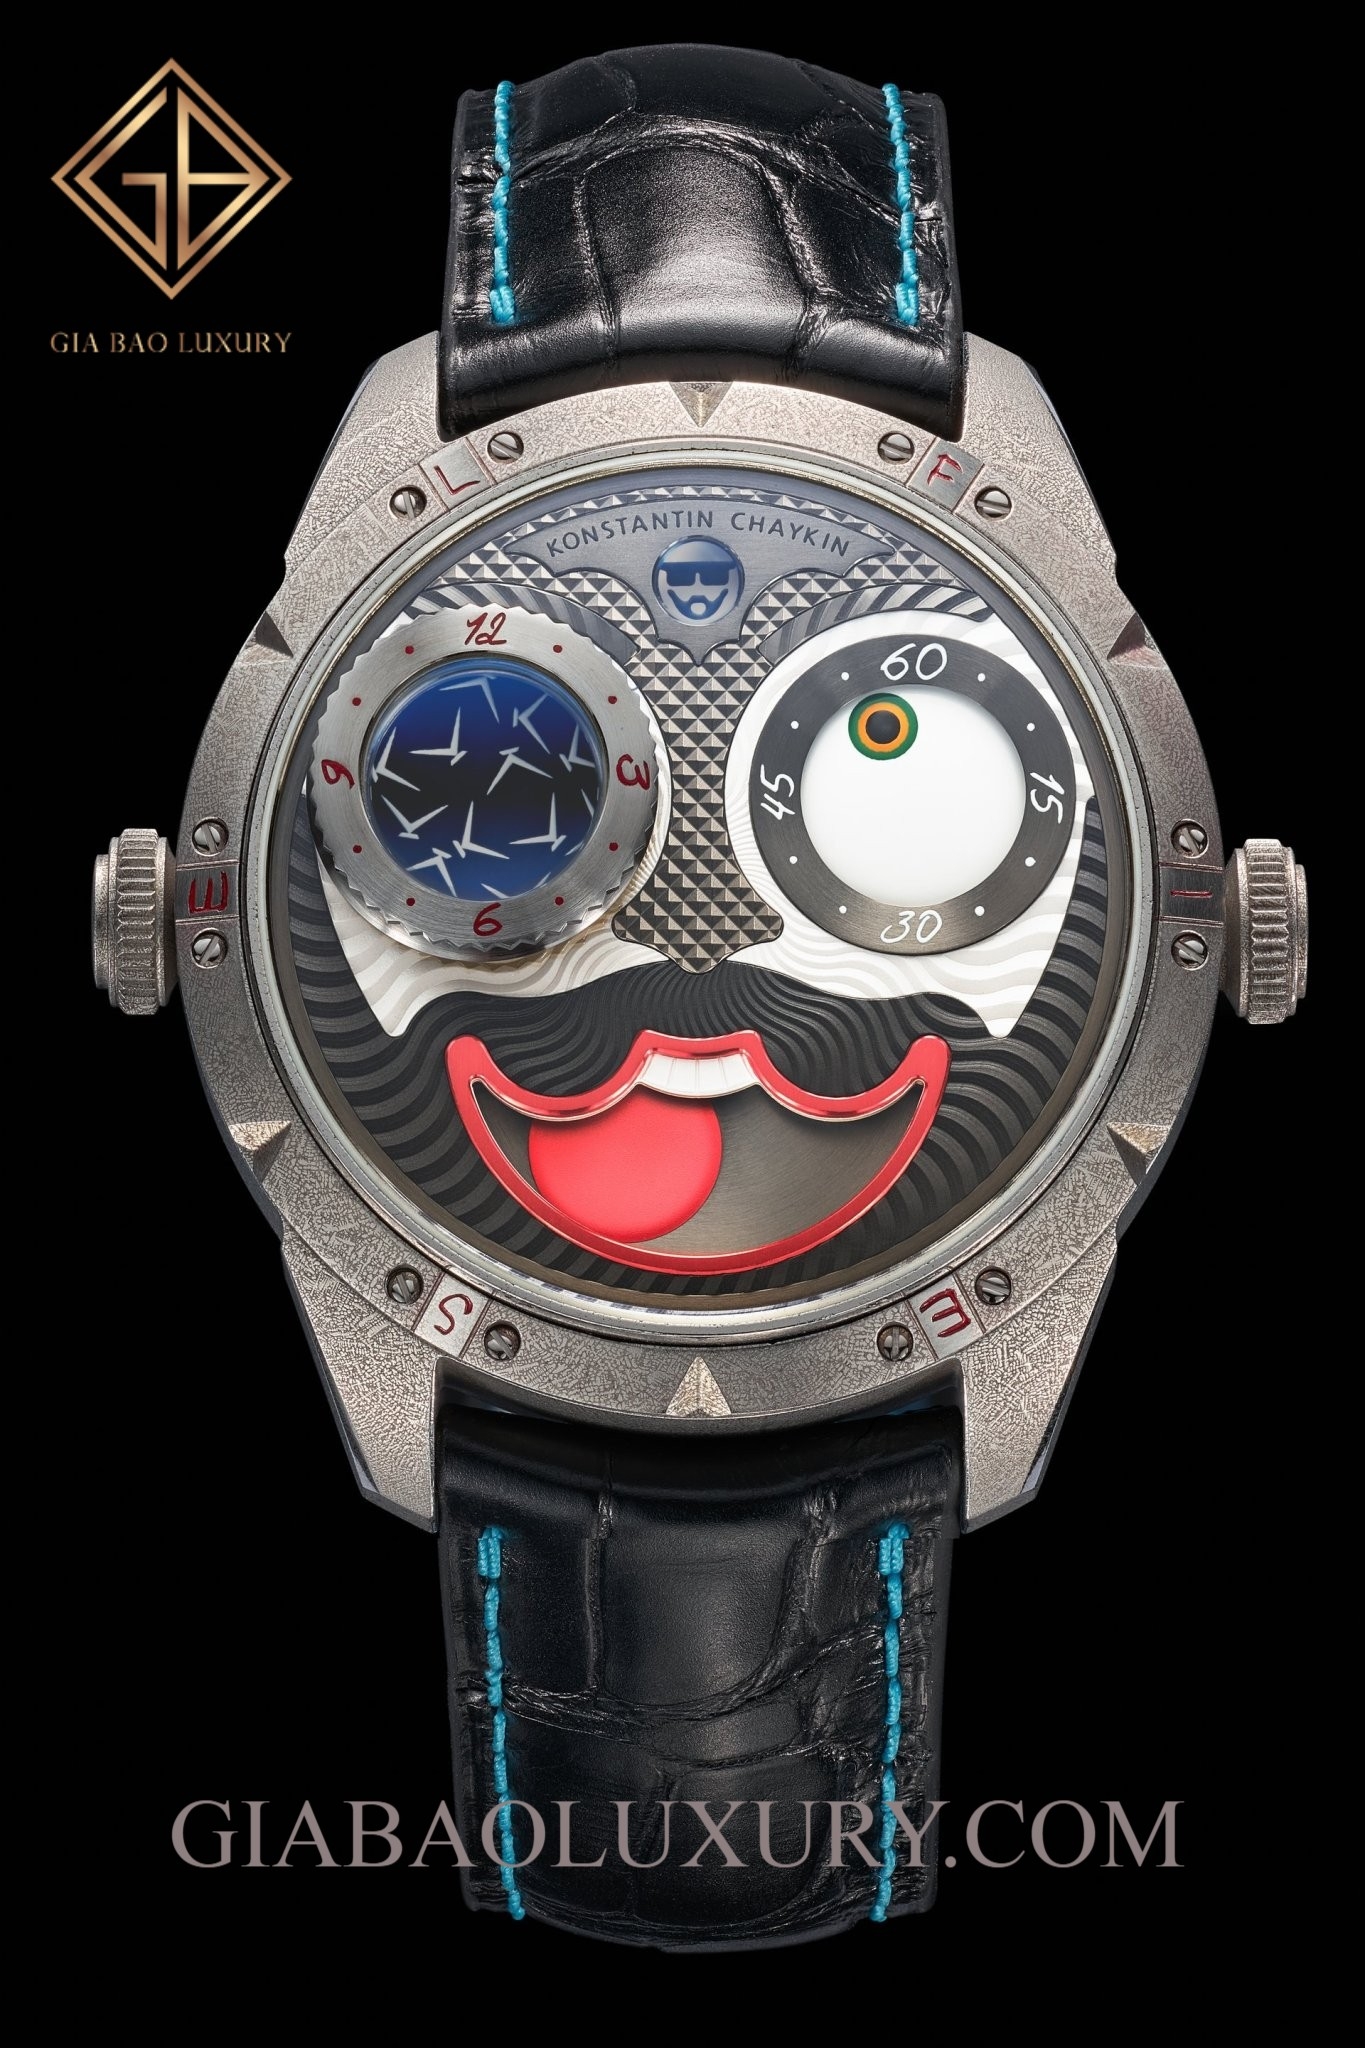 Review đồng hồ Konstantin Chaykin Joker Selfie tại Only Watch 2019